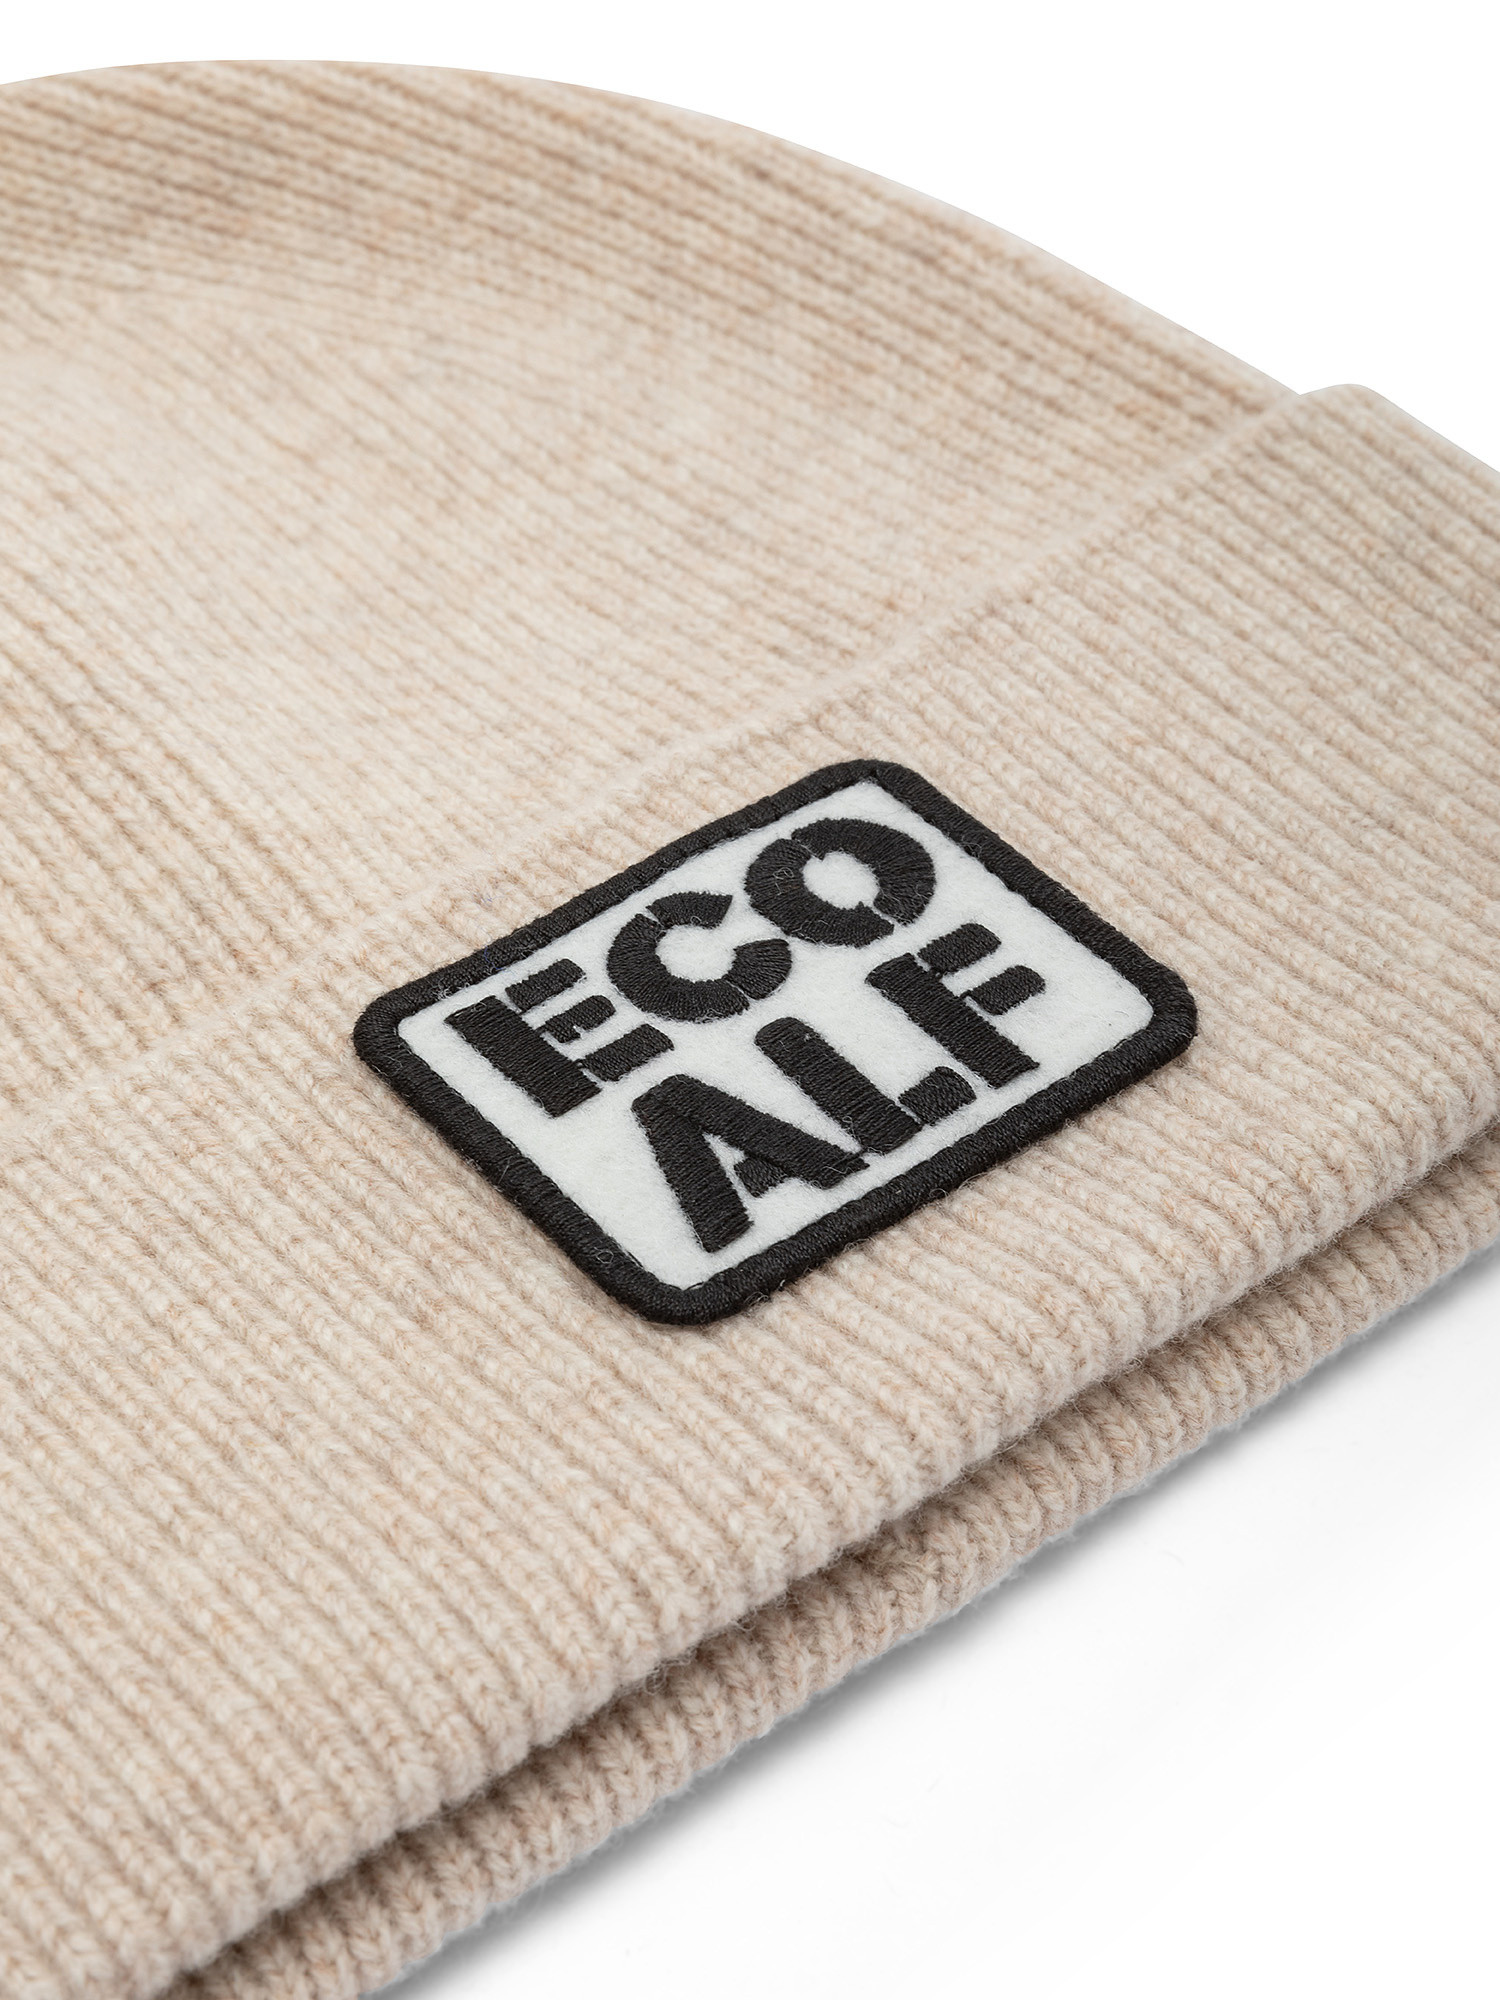 Ecoalf - Hat with logo, Light Beige, large image number 1